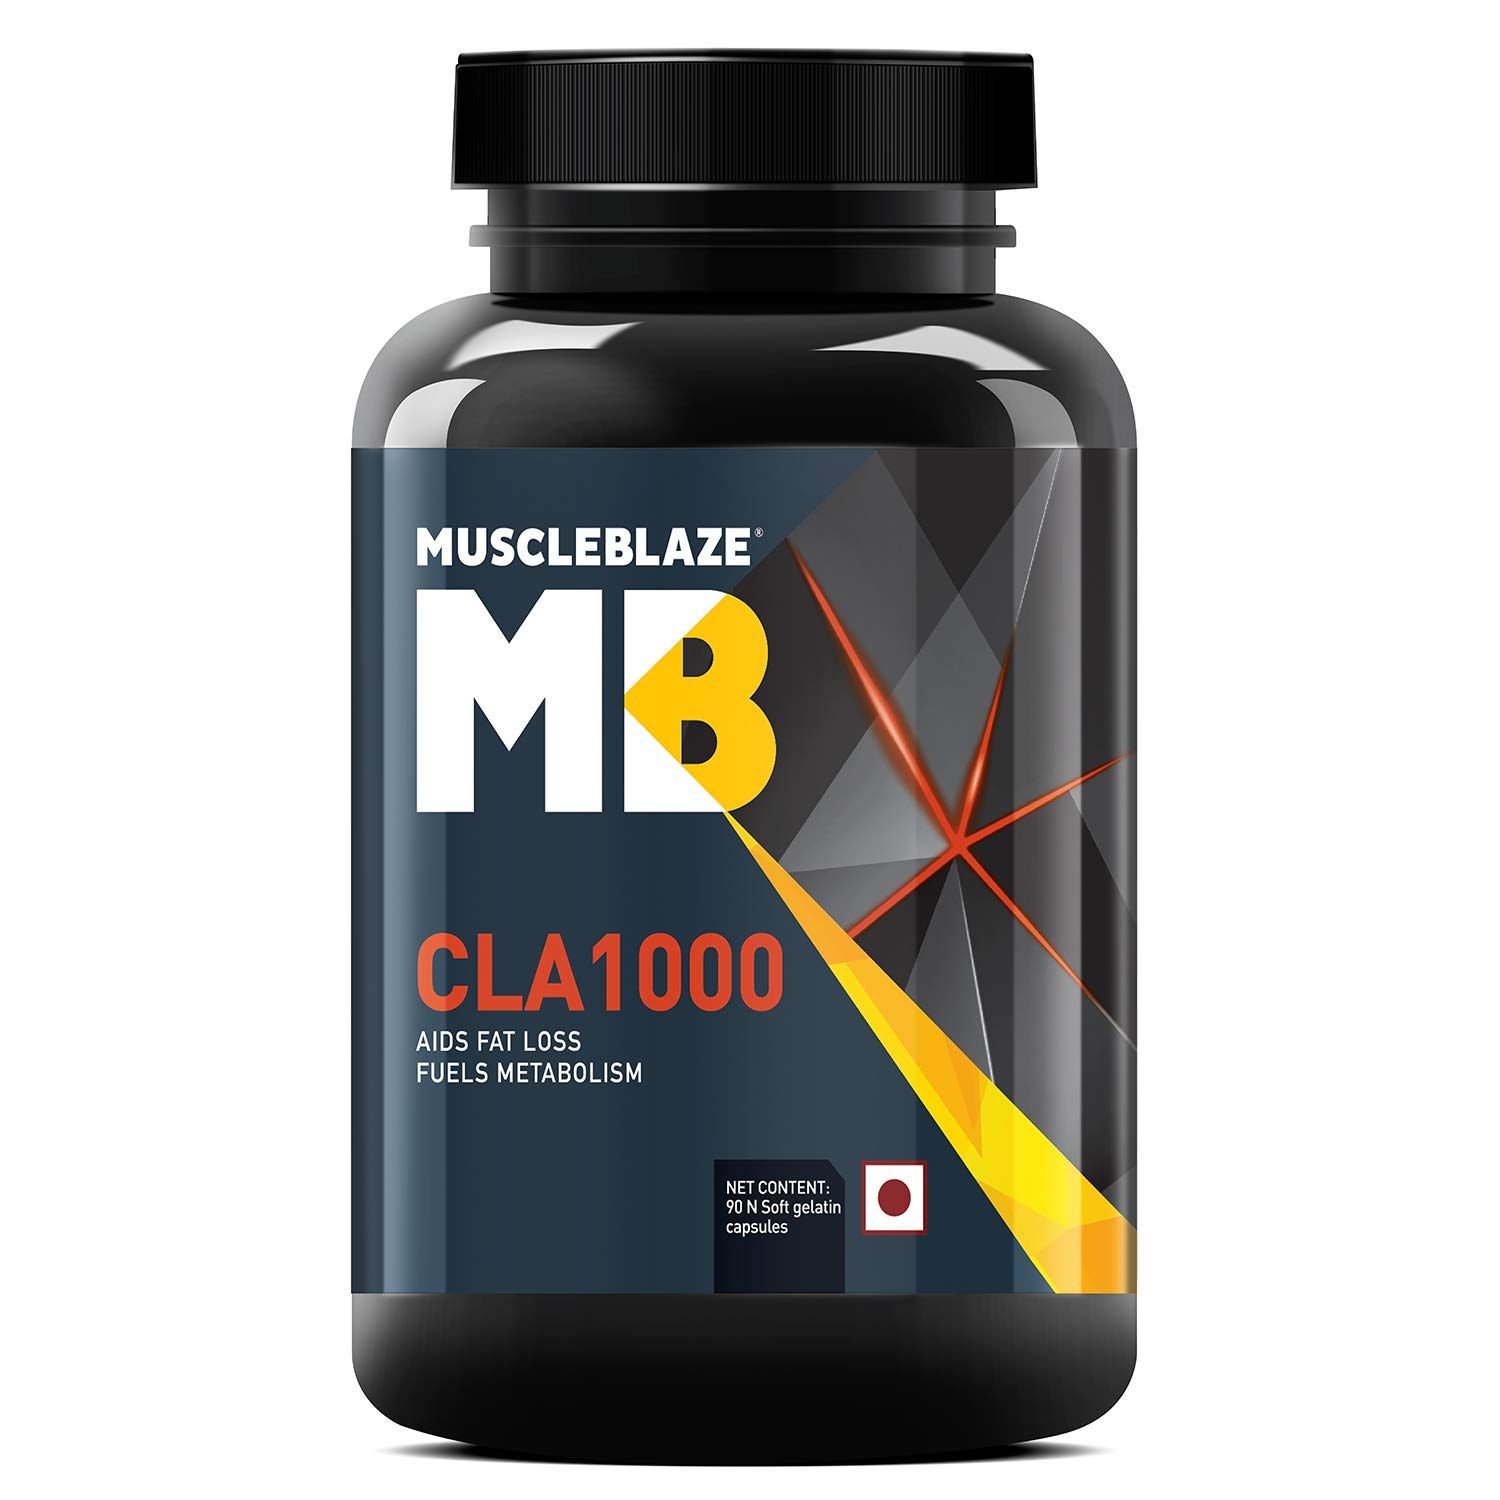 Muscle Blaze CLA 1000 Fat Loss Image